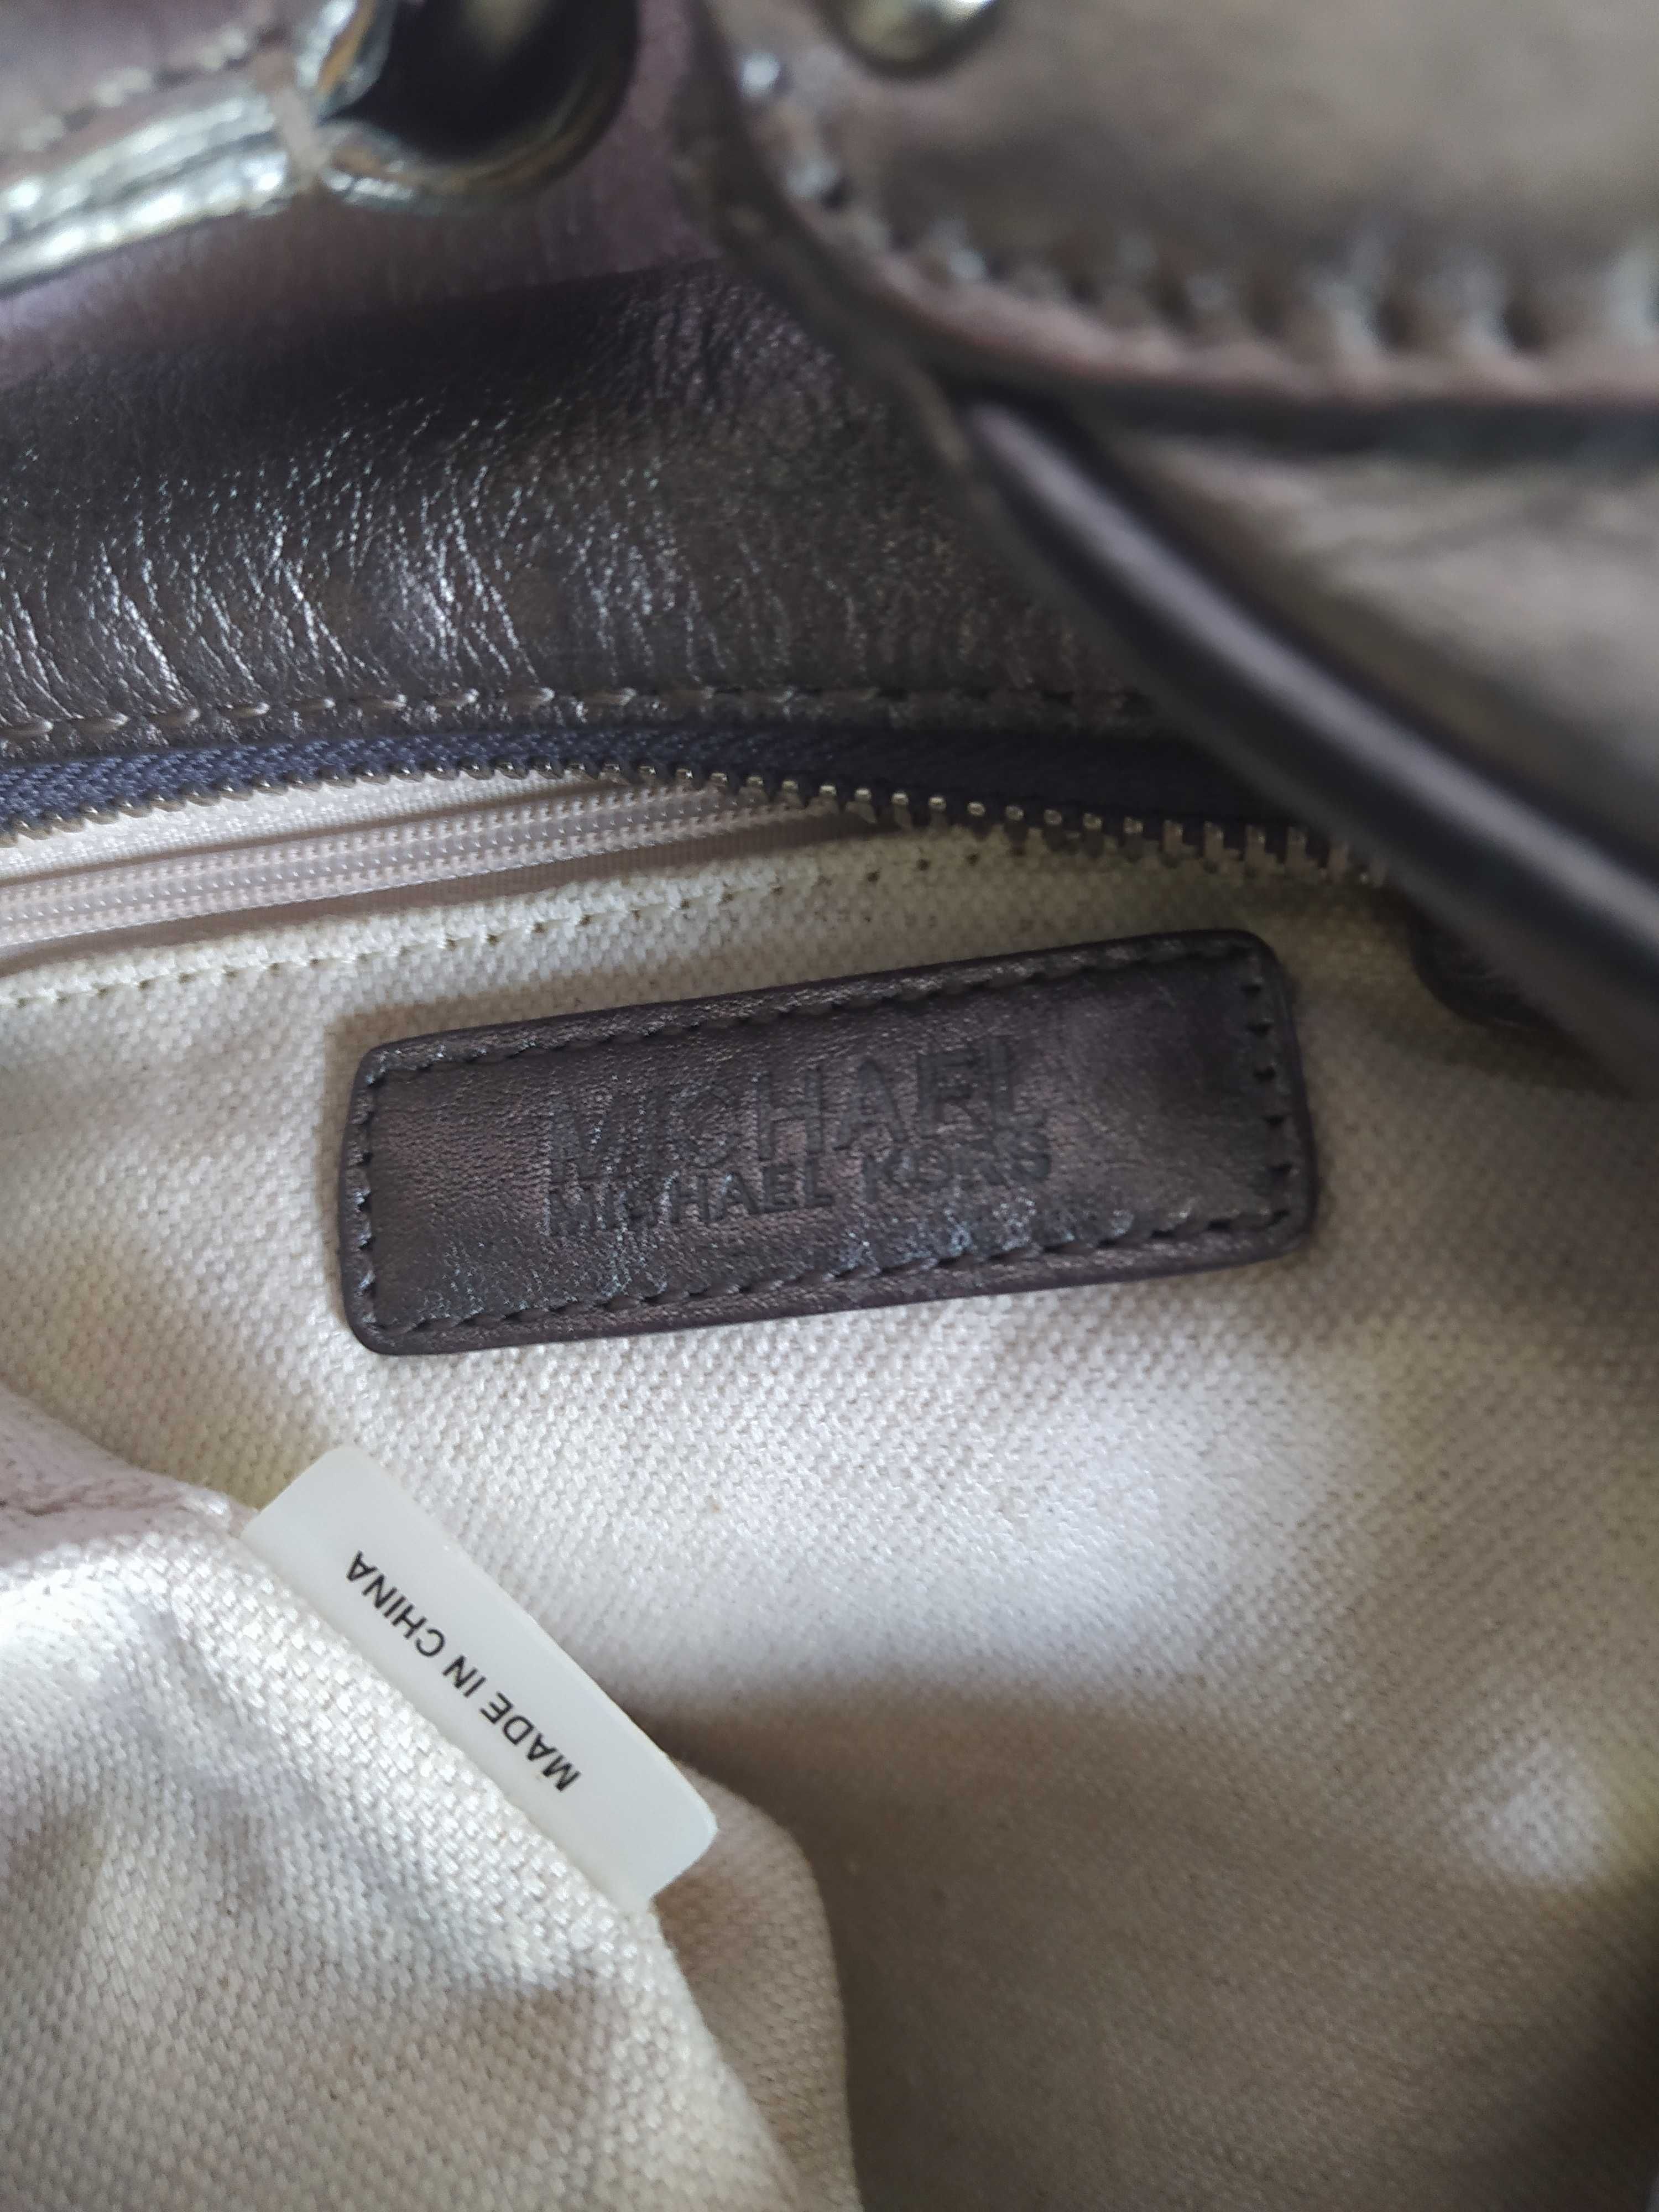 MK Michael Kors skórzana torebka torba